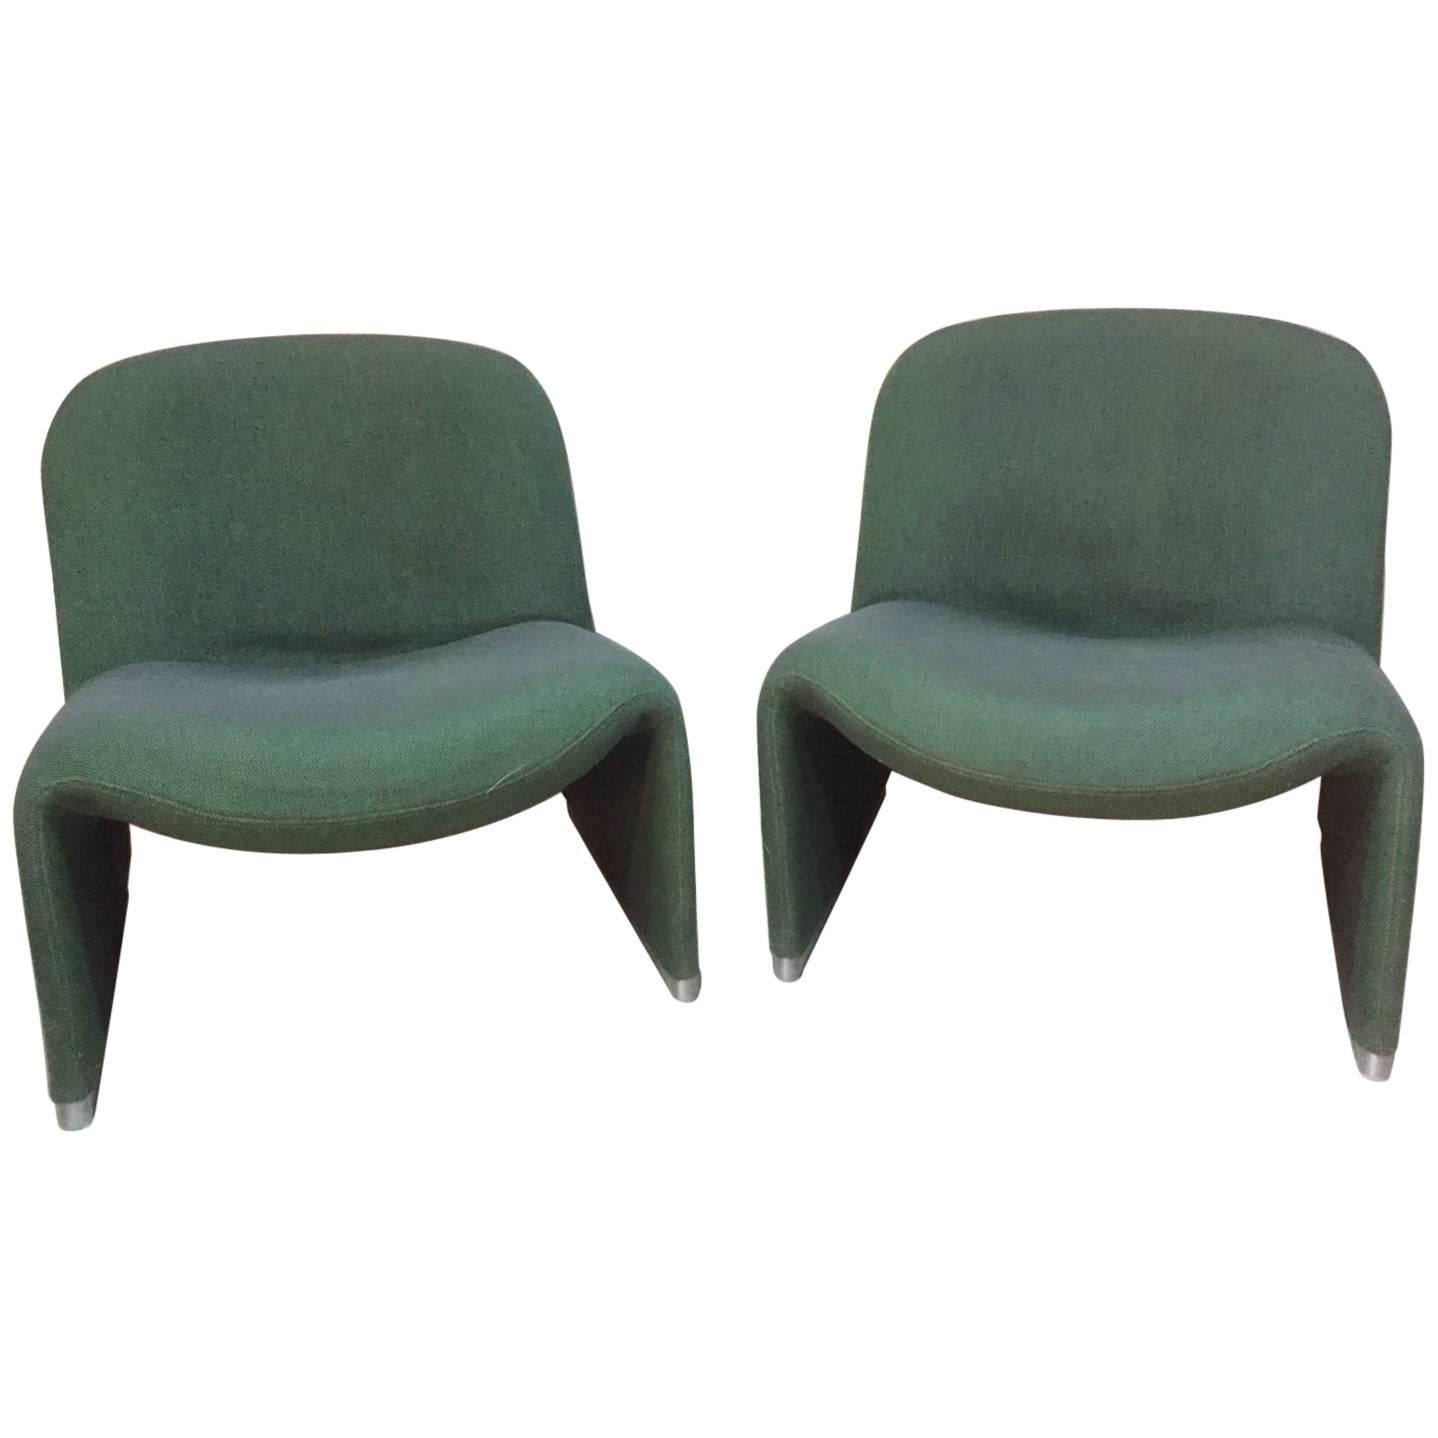 Pair of Green Italian Designer Giancarlo Piretti "Alky" Lounge Chair, 1970s